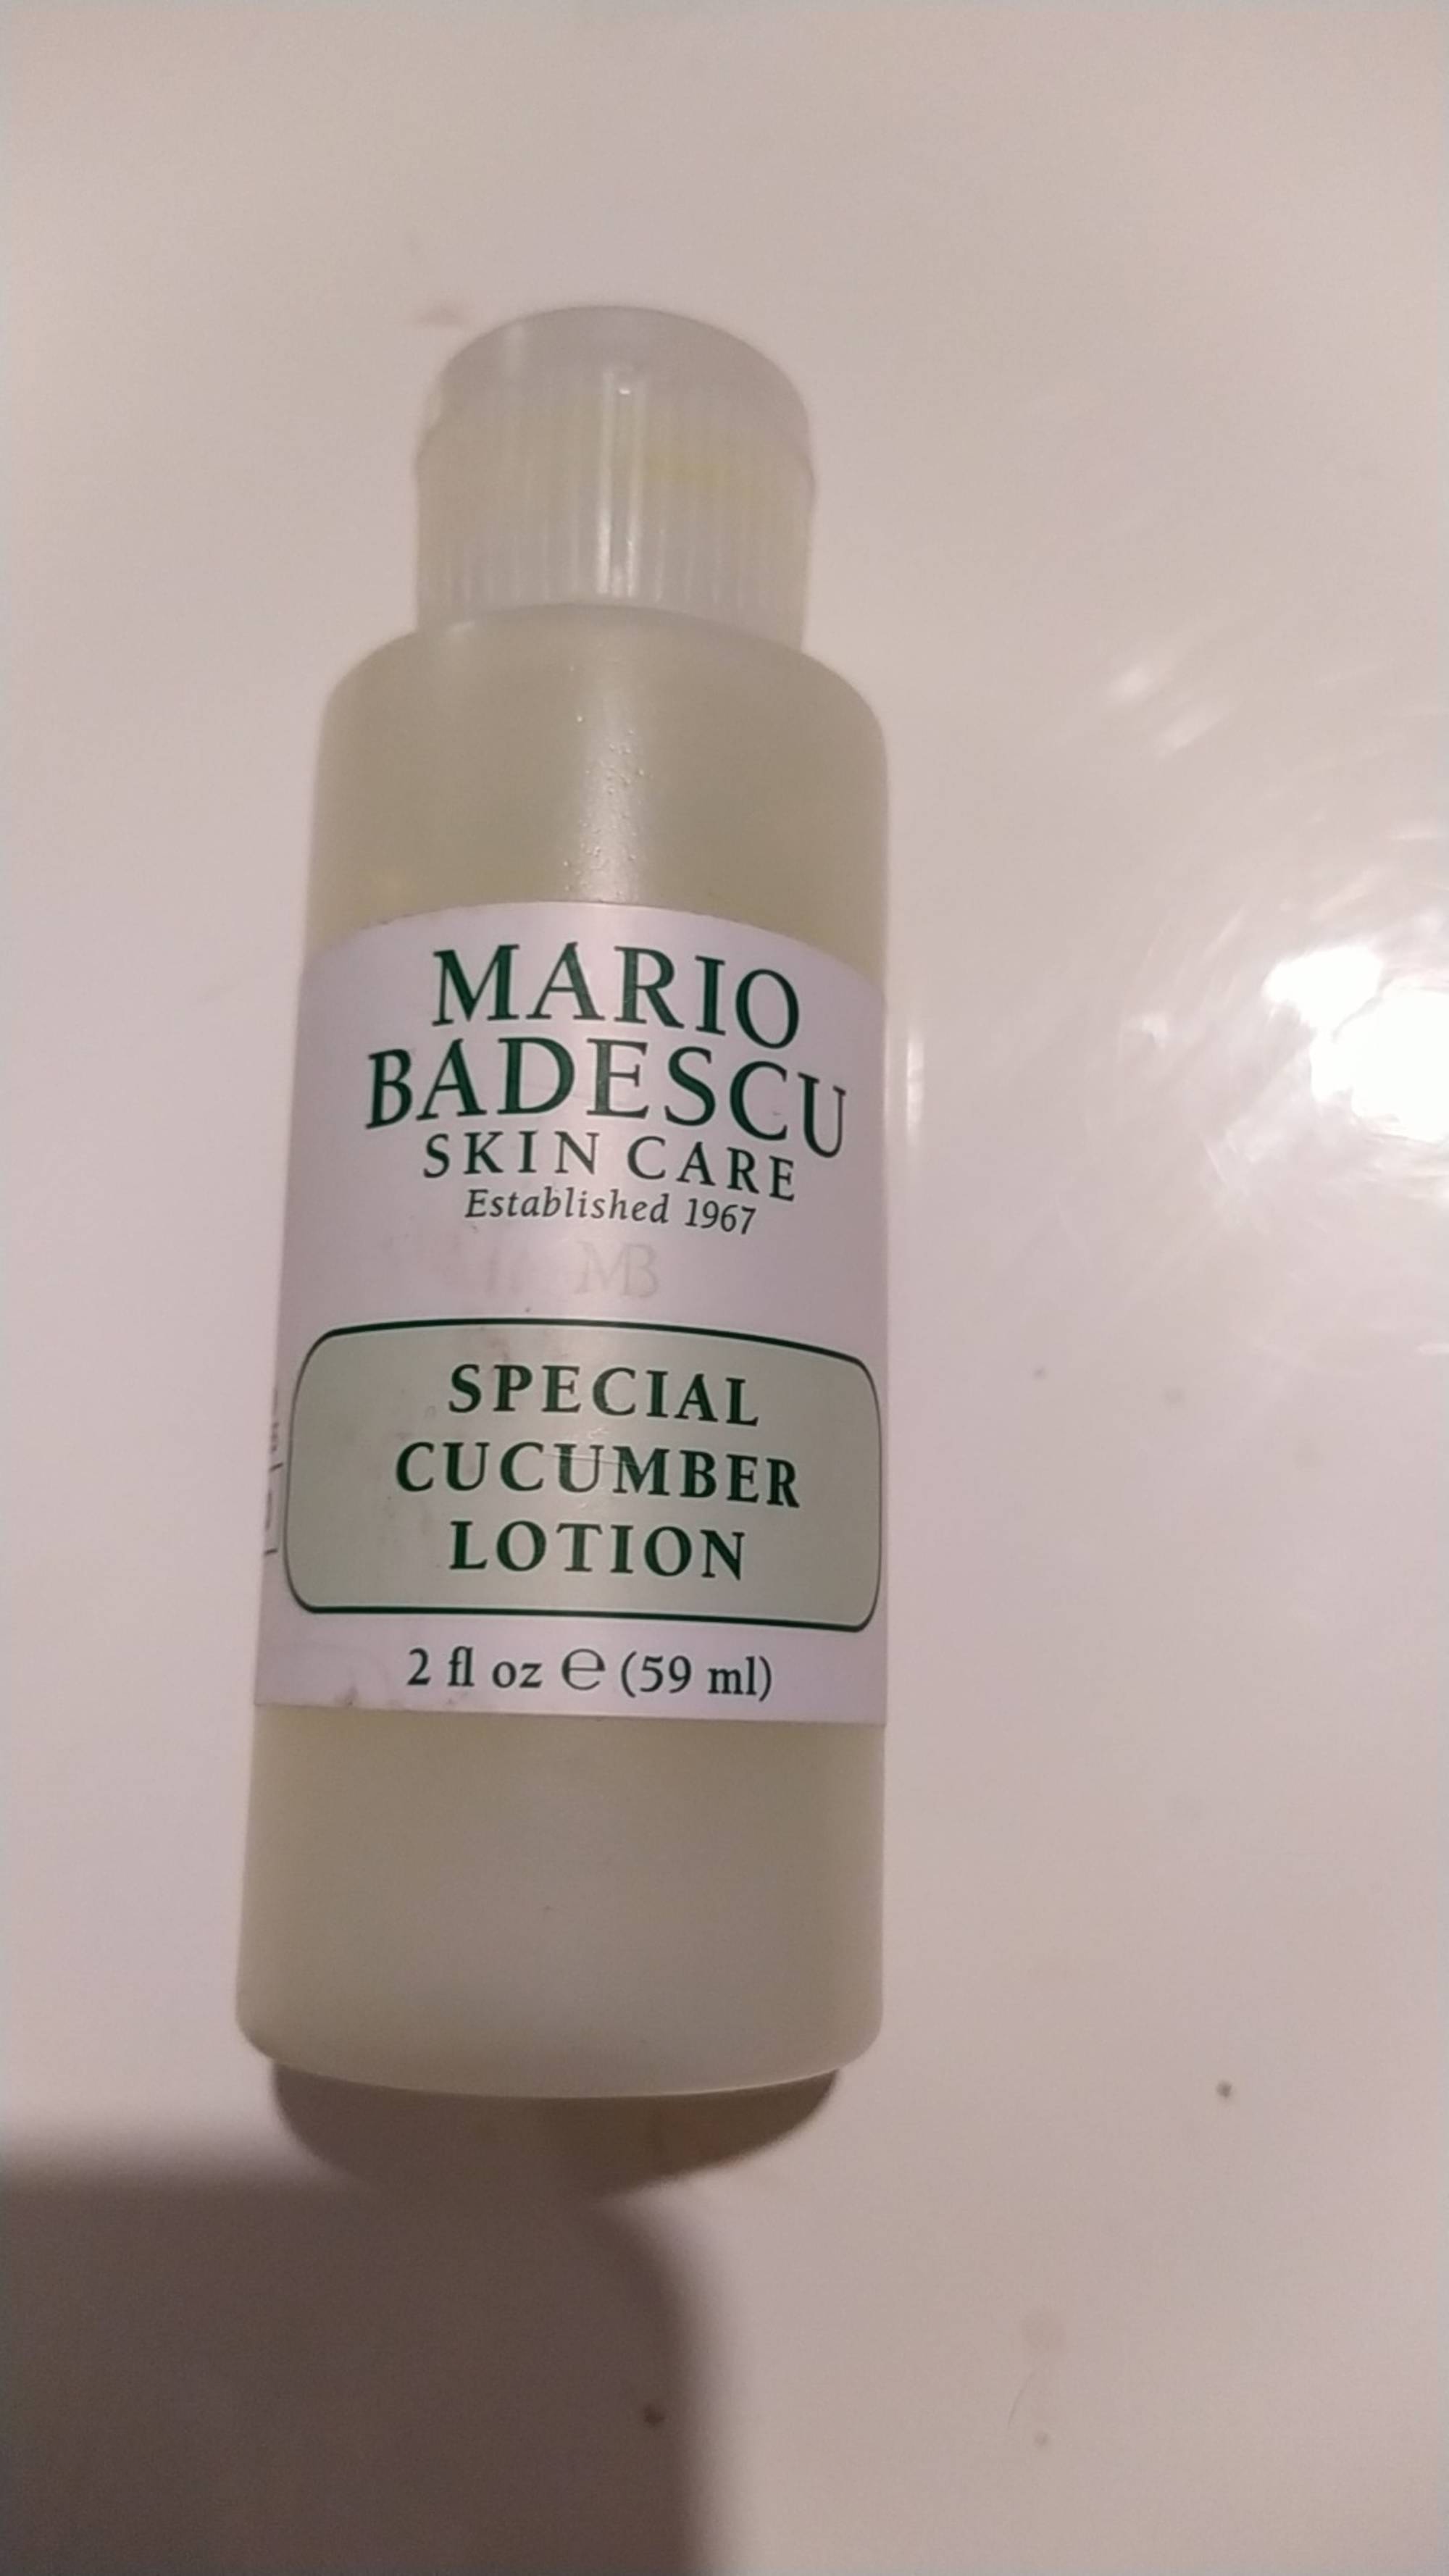 MARIO BADESCU - Special cucumber lotion